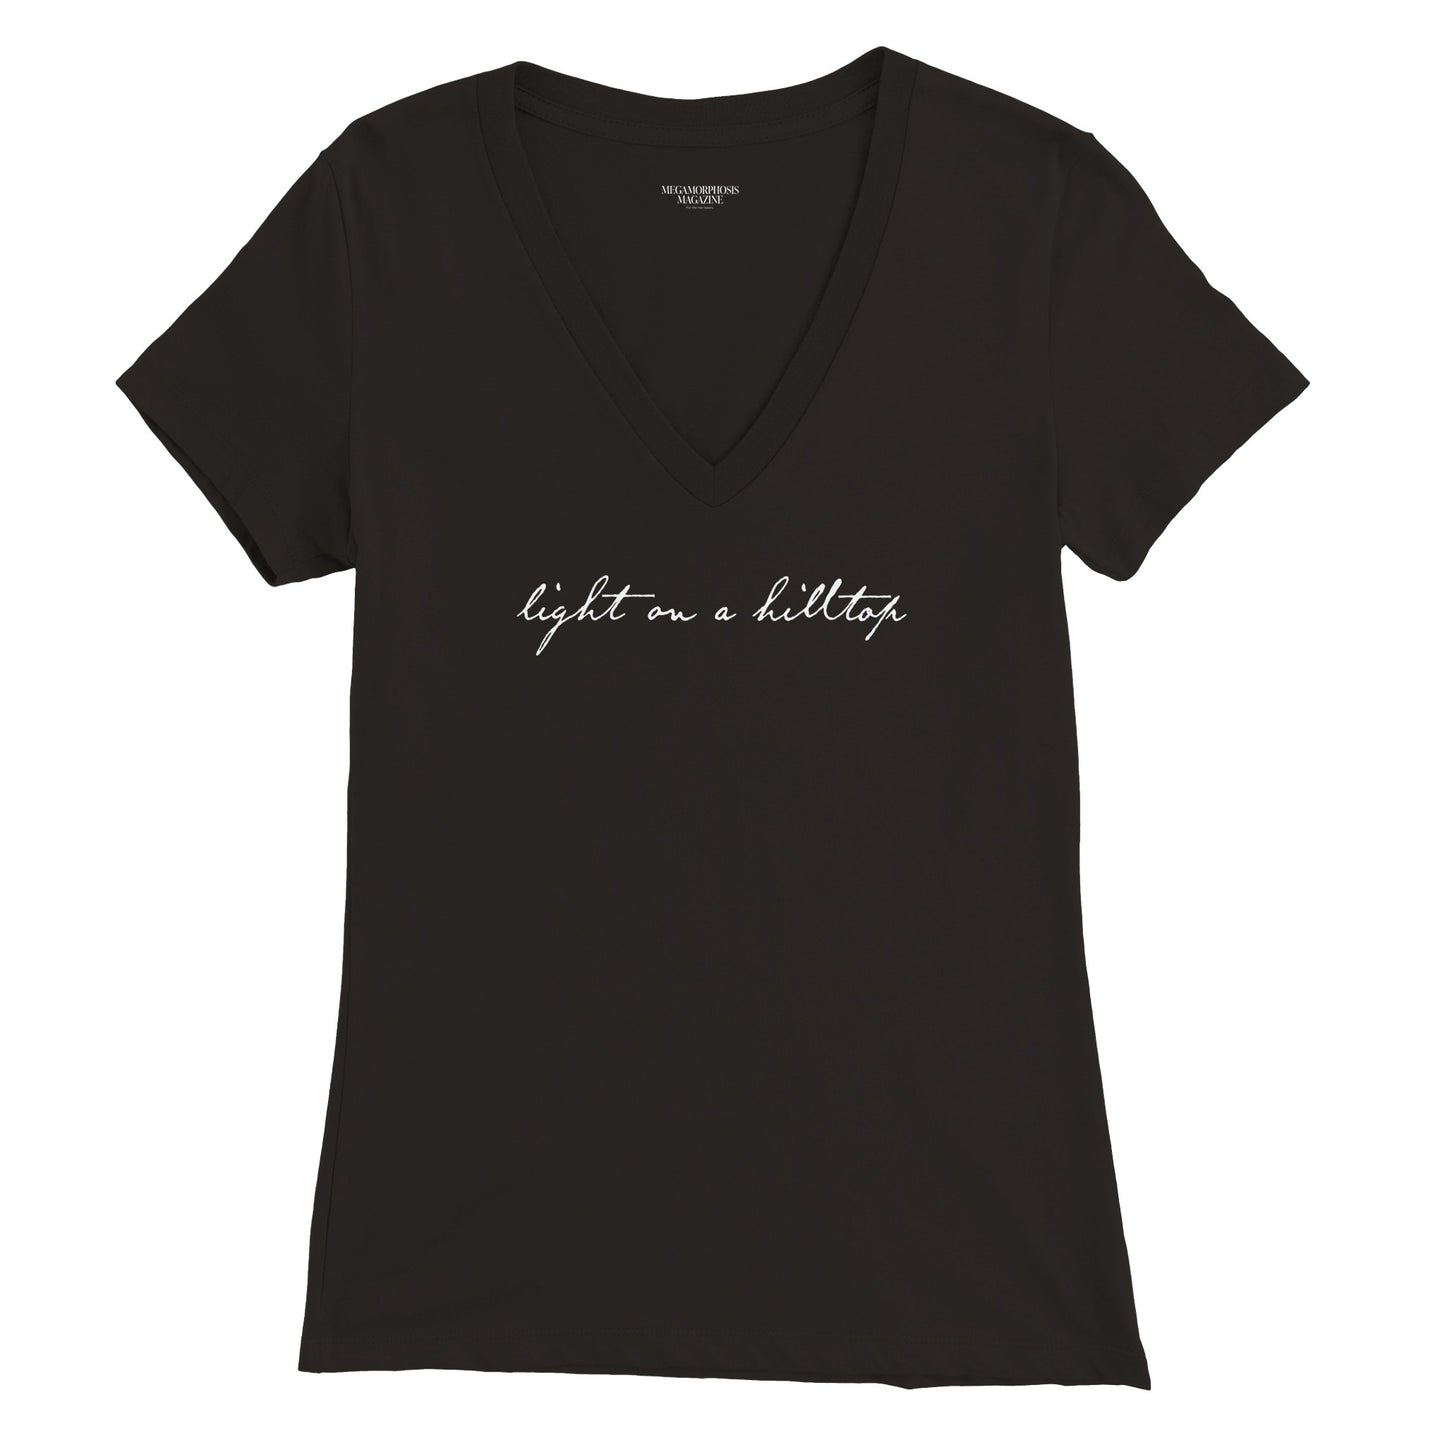 Light on a Hilltop  -  Women's V-Neck T-shirt